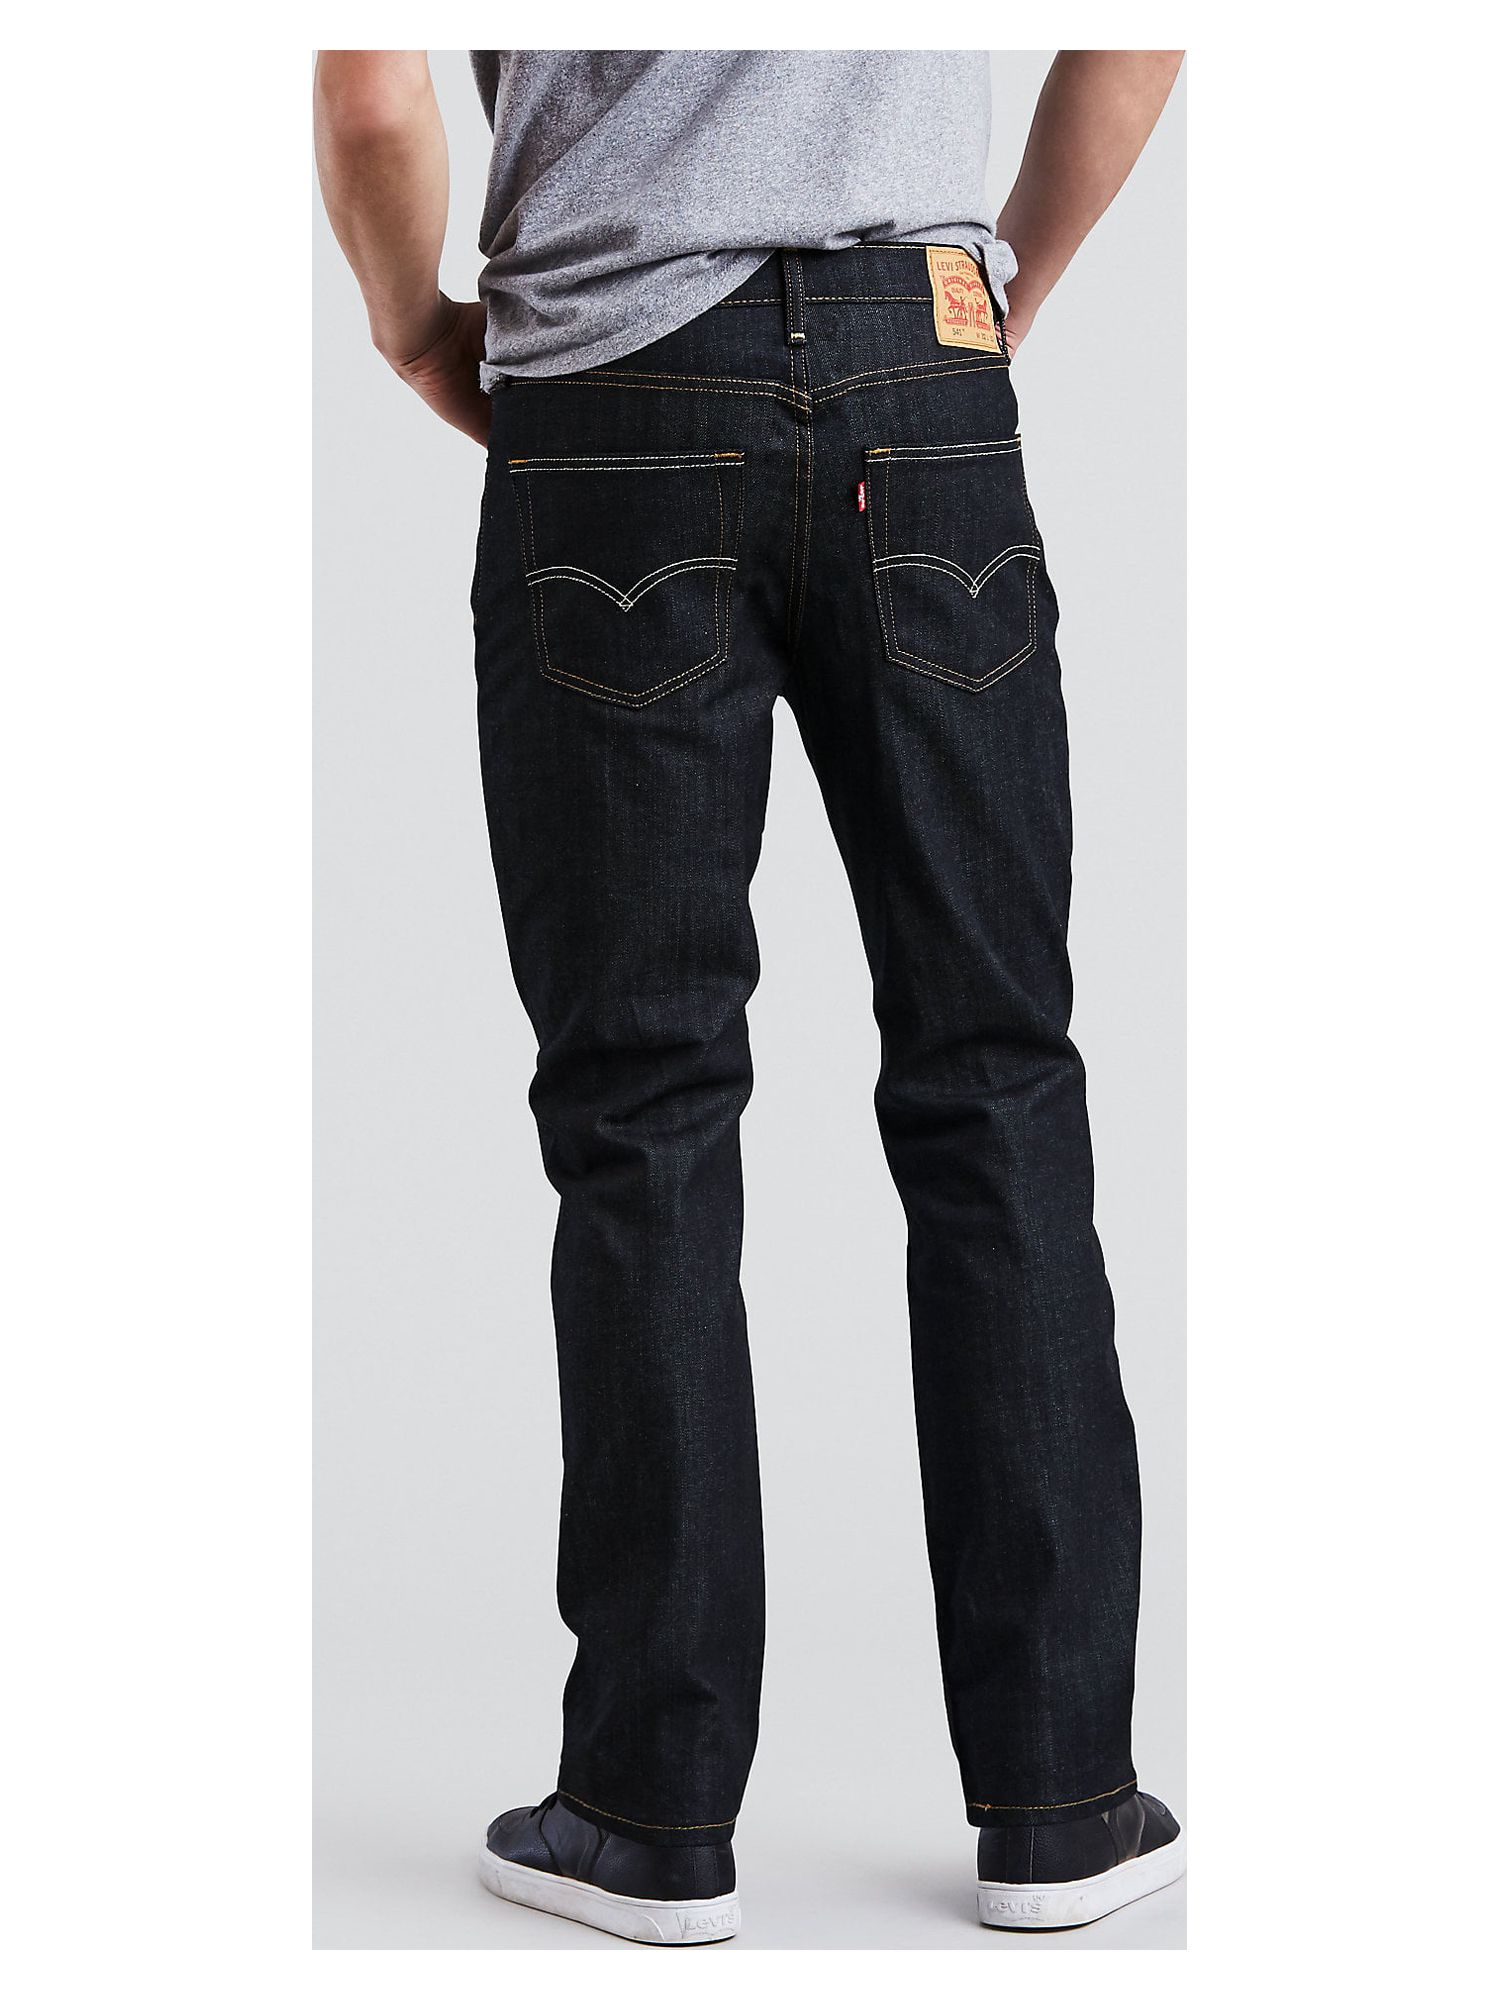 Levi's Men's 541 Athletic Fit Taper Jeans - image 4 of 8